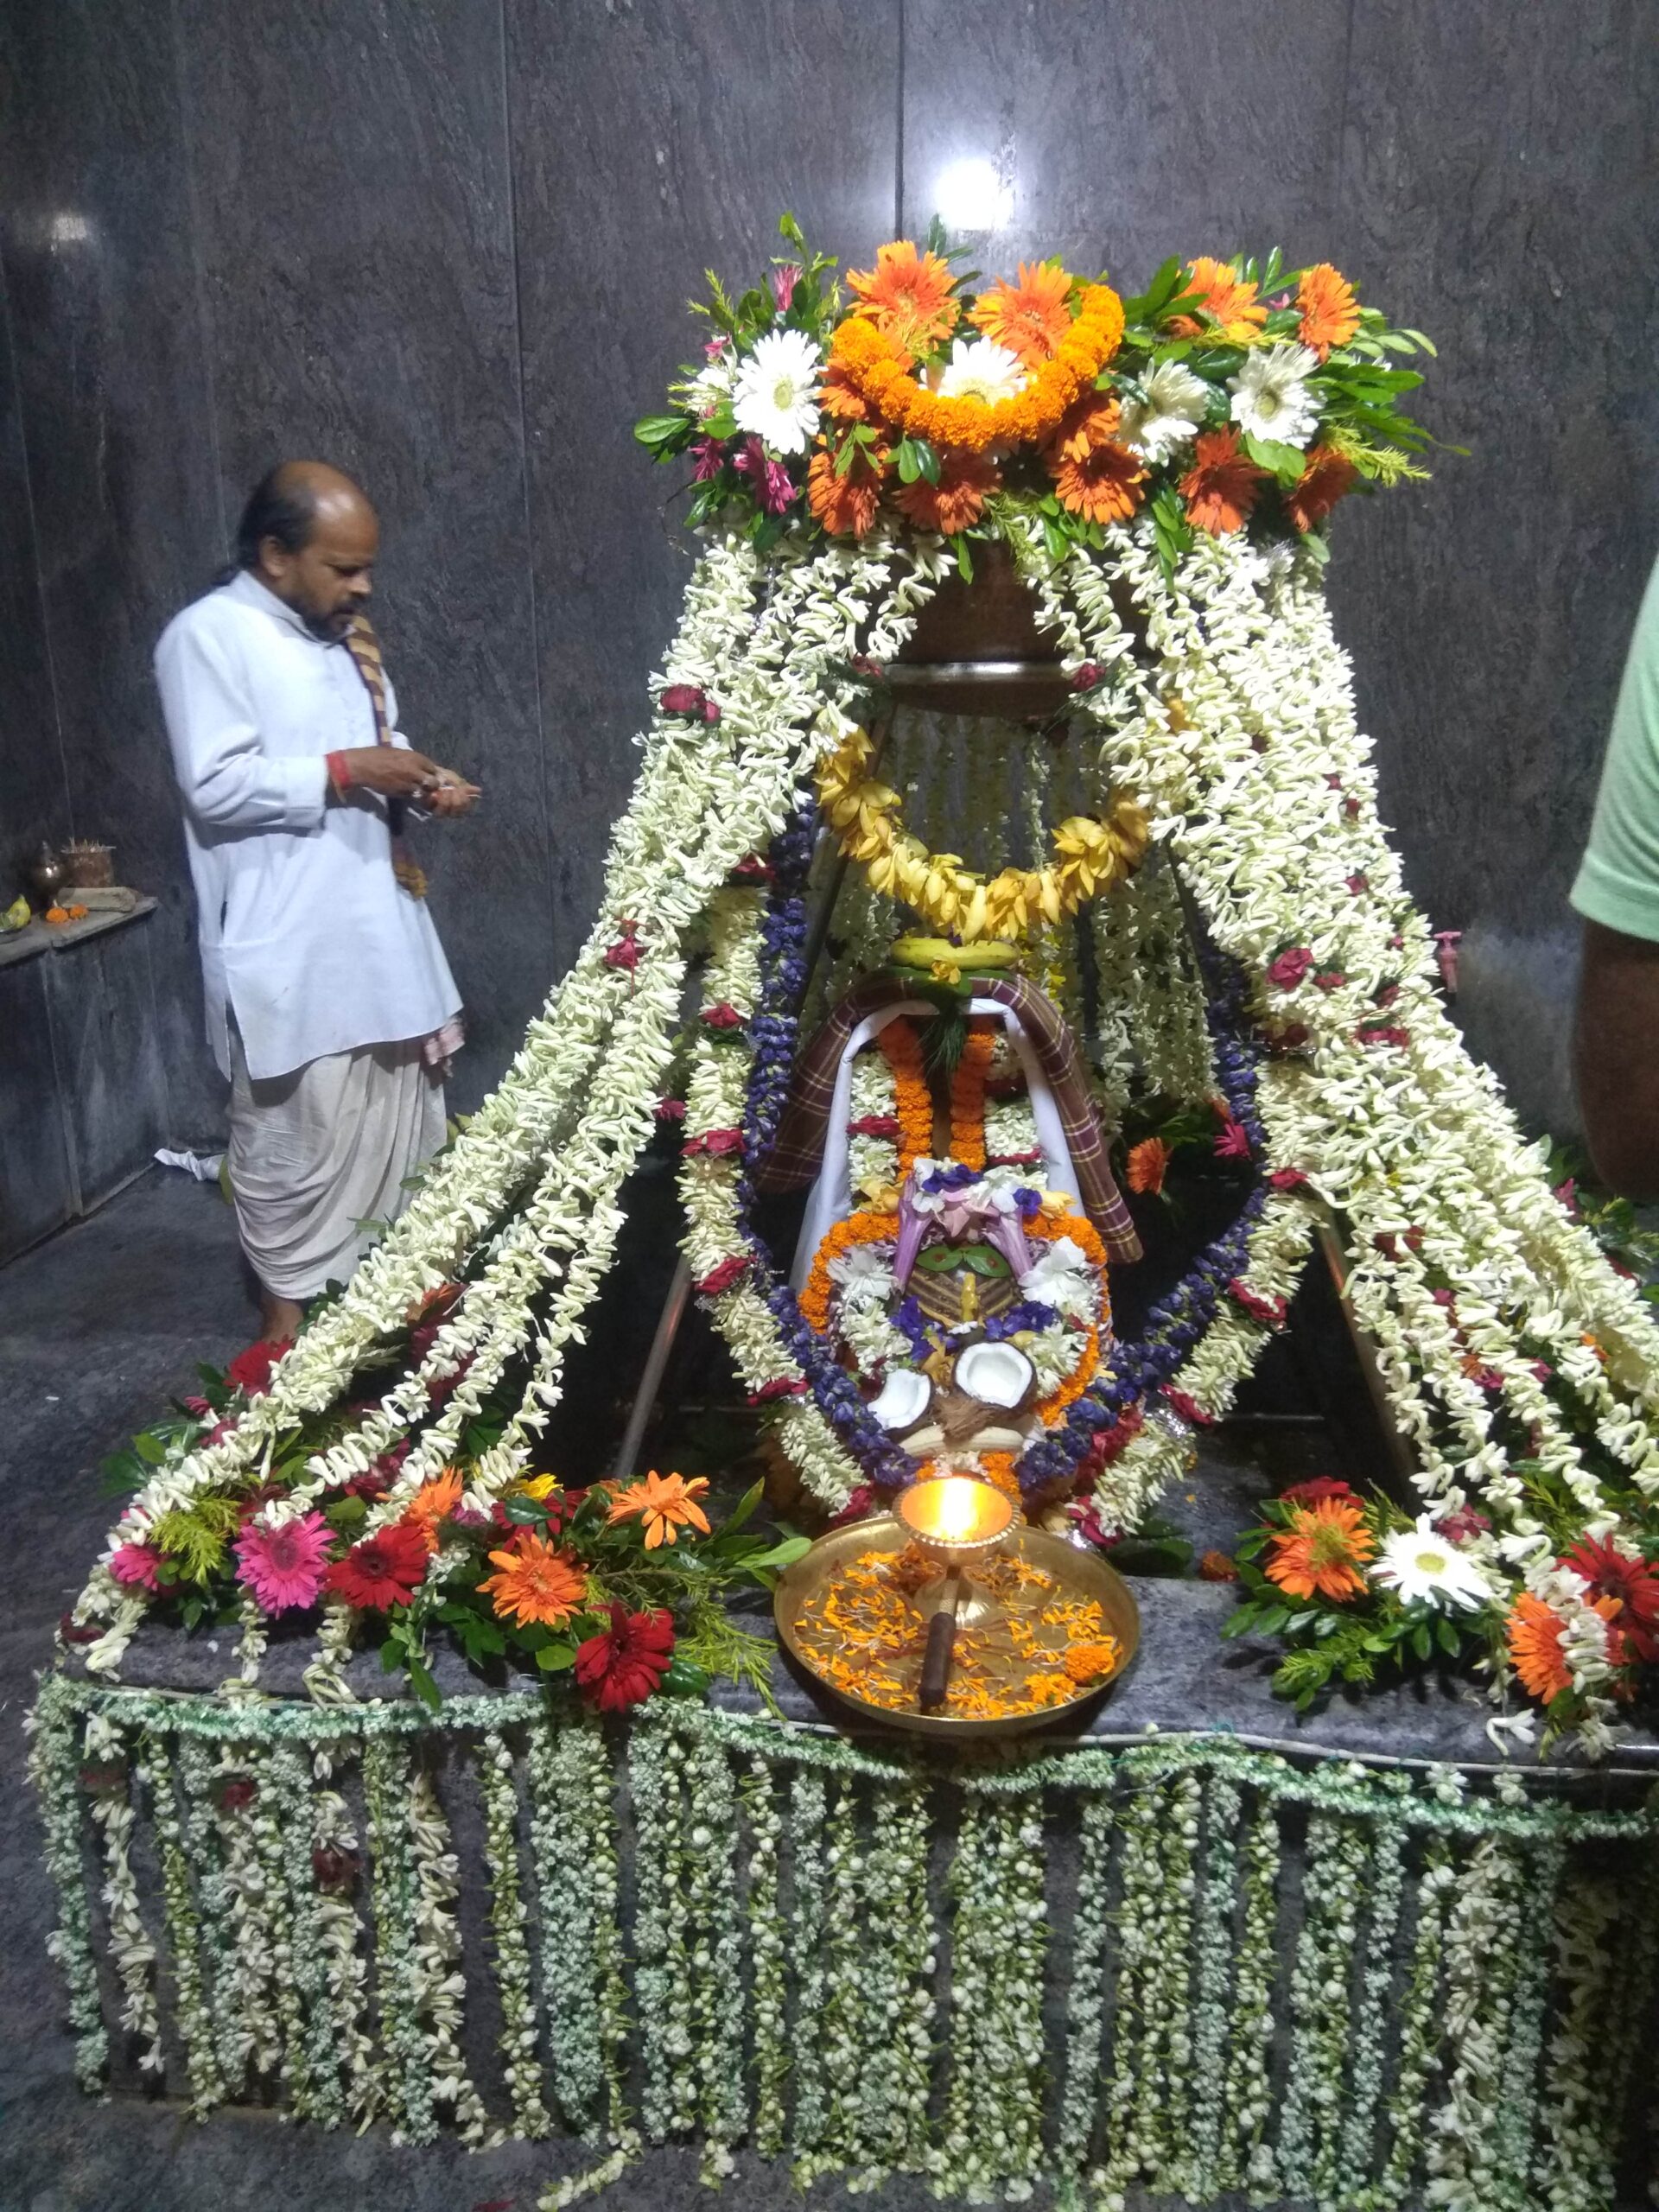 Rudrabhishek at Shyam Baba Mandir organised by Ram Murti Tiwari